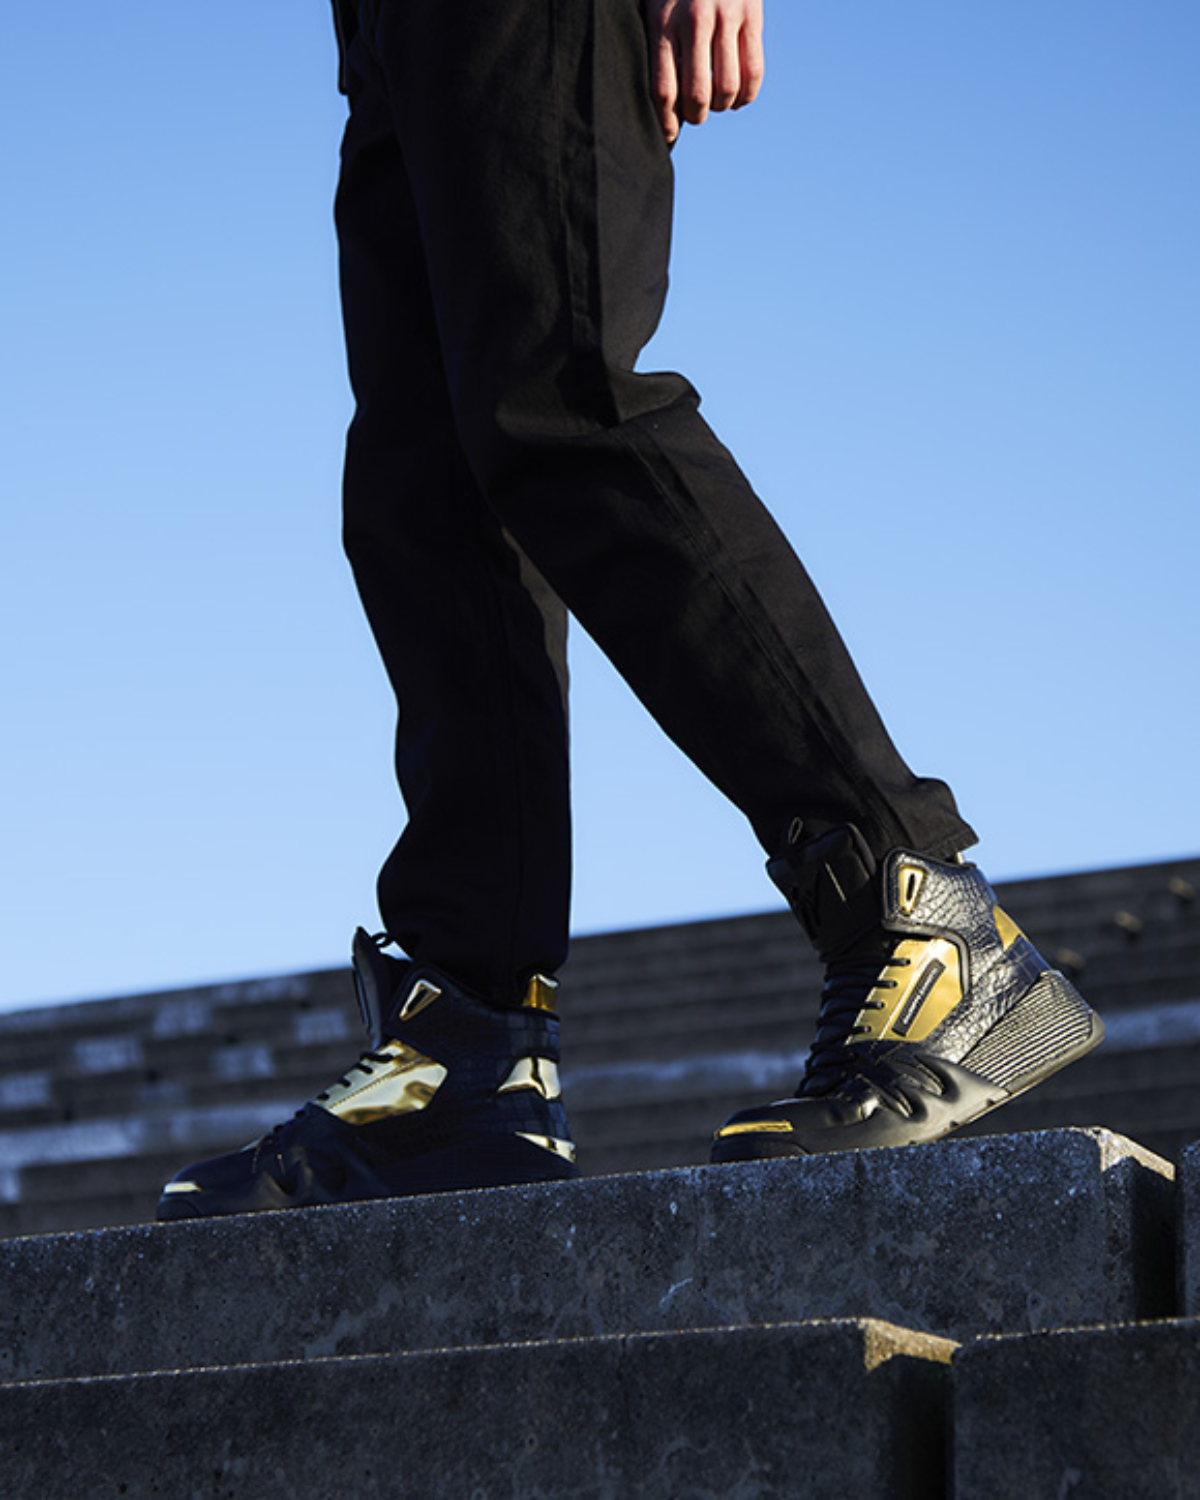 Giuseppe Zanotti's 'Talon': The innovative new sneaker